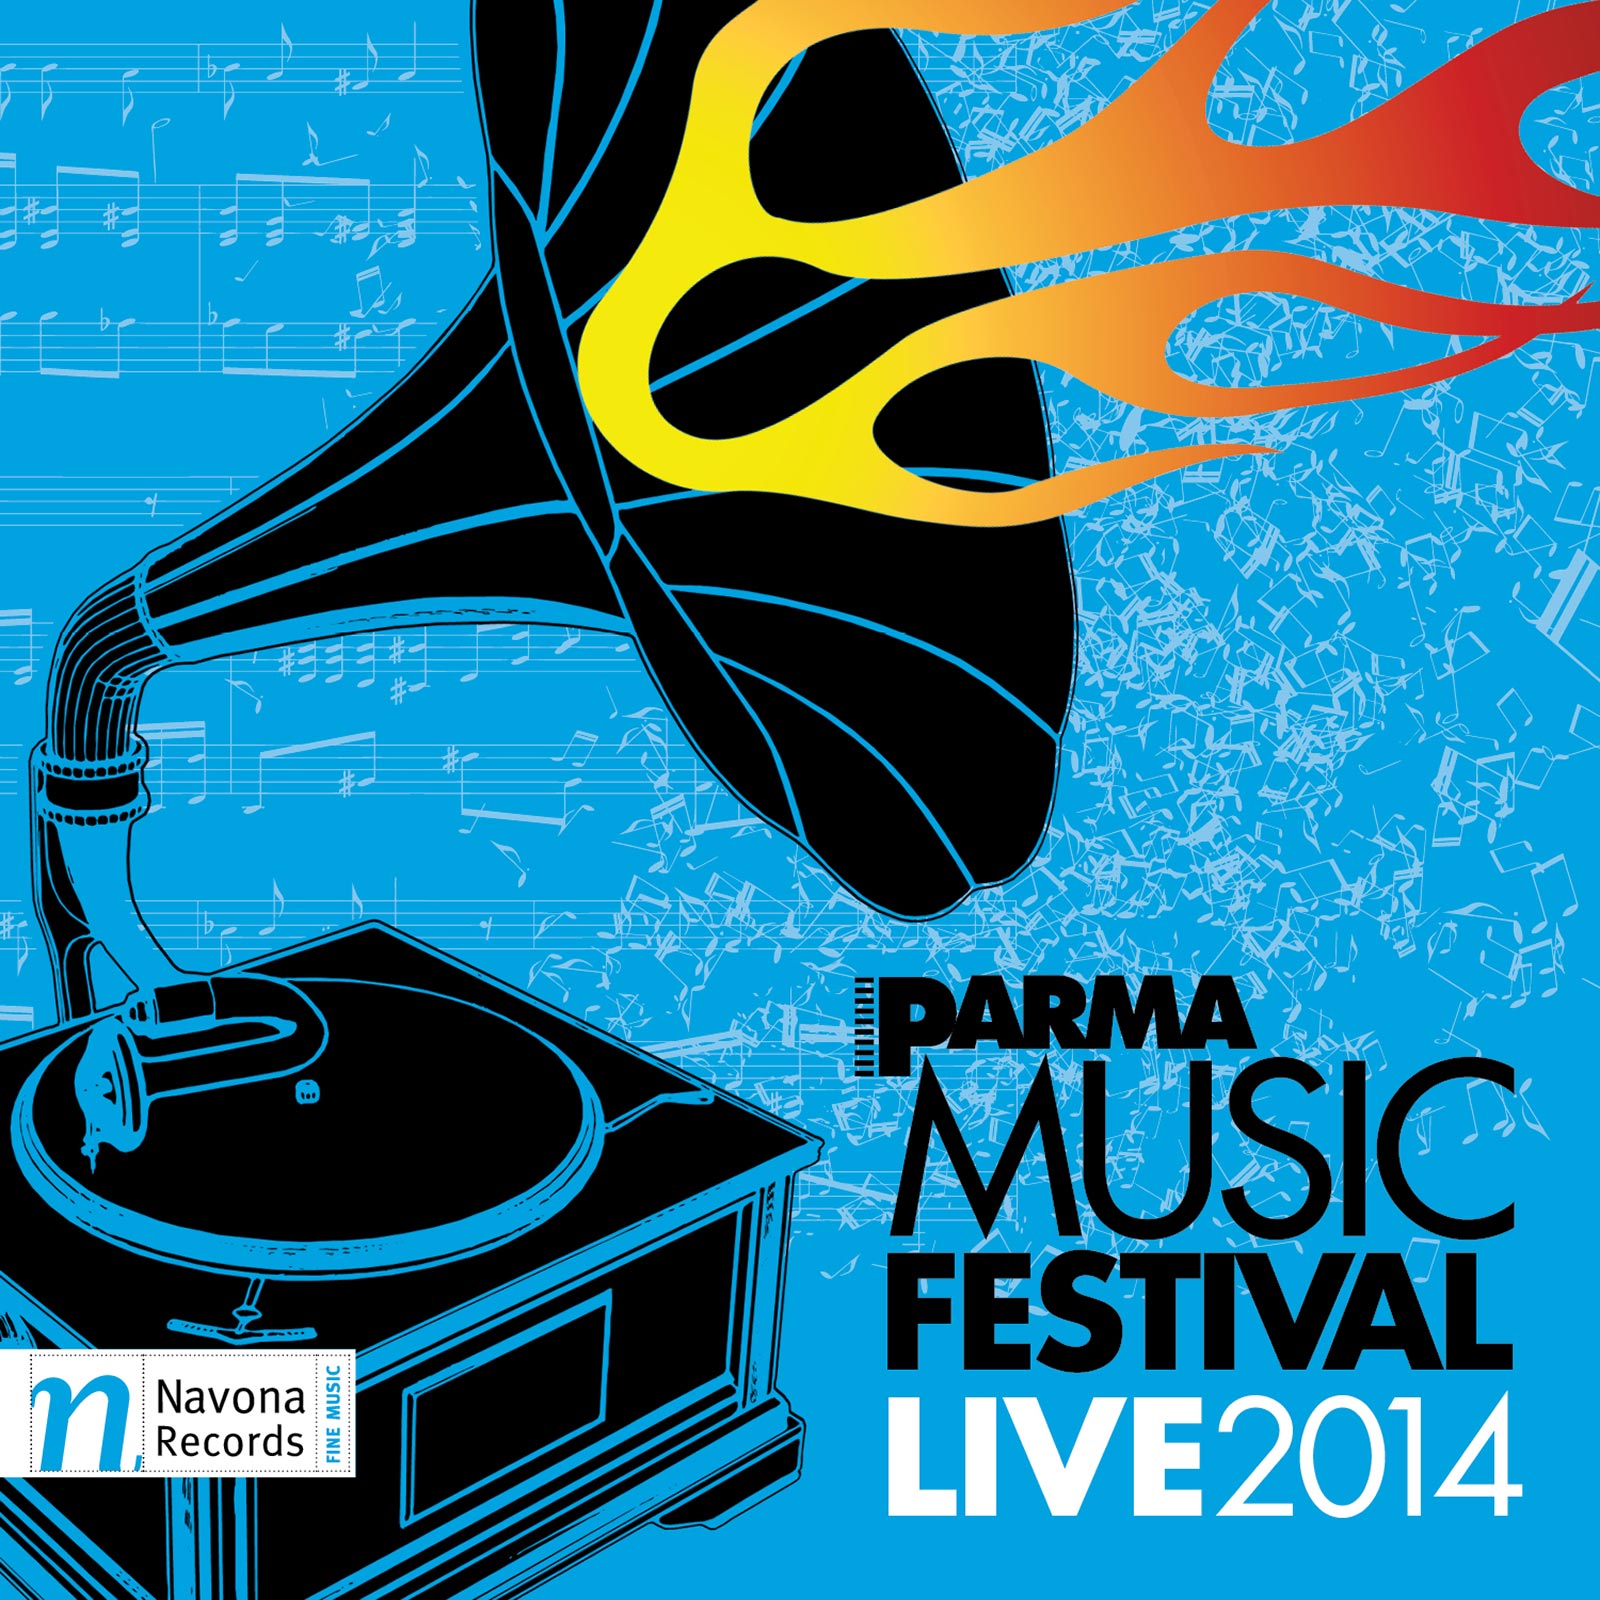 PARMA MUSIC FESTIVAL LIVE 2014 - Album Cover